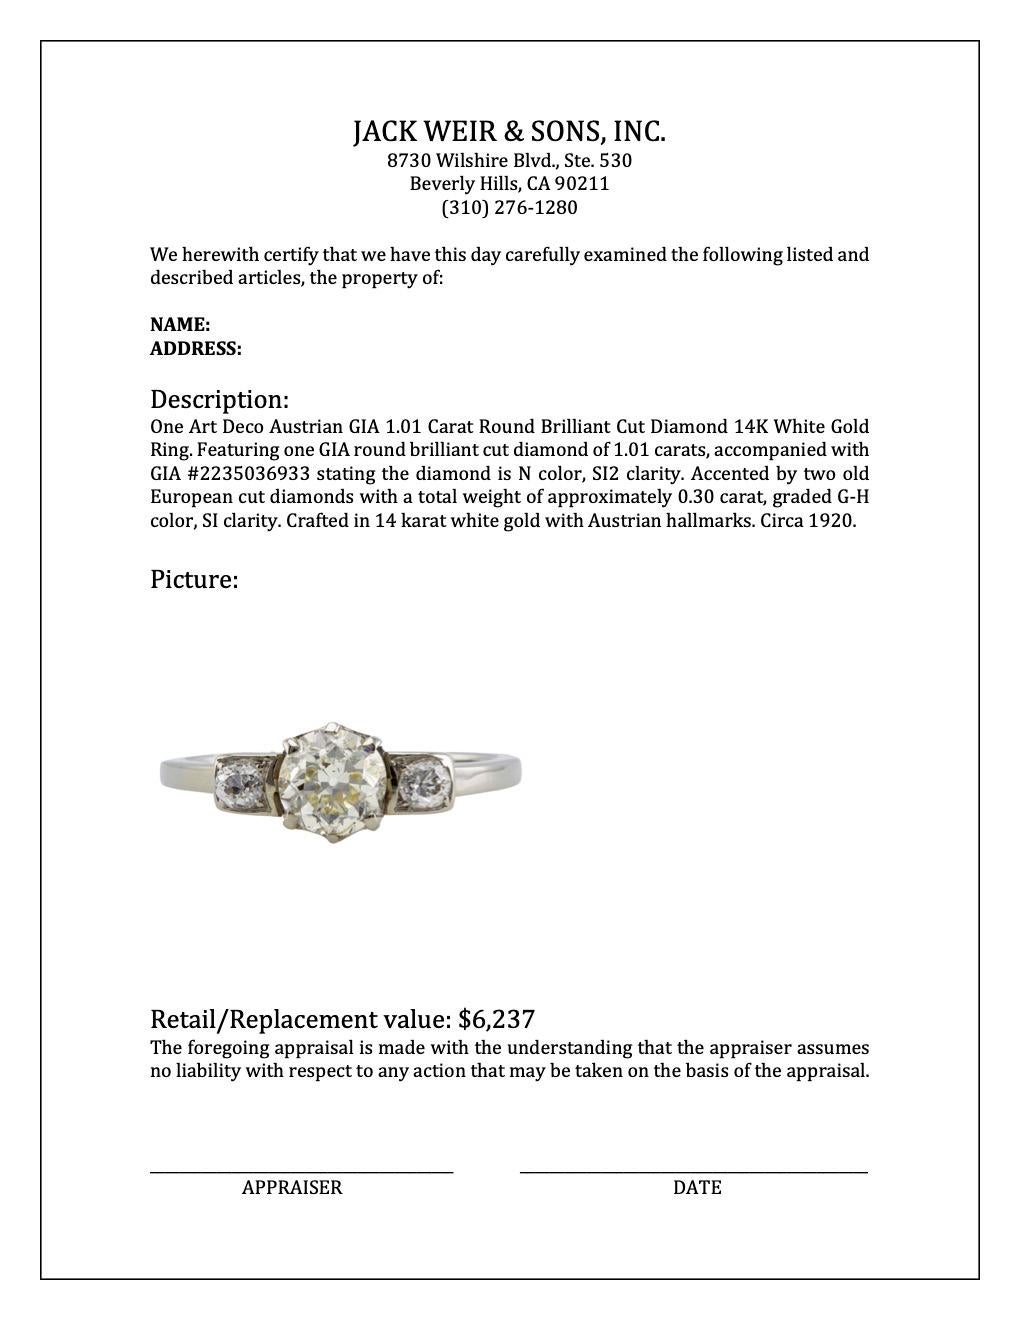 Art Deco Austrian GIA 1.01 Carat Round Brilliant Cut Diamond 14K White Gold Ring For Sale 3